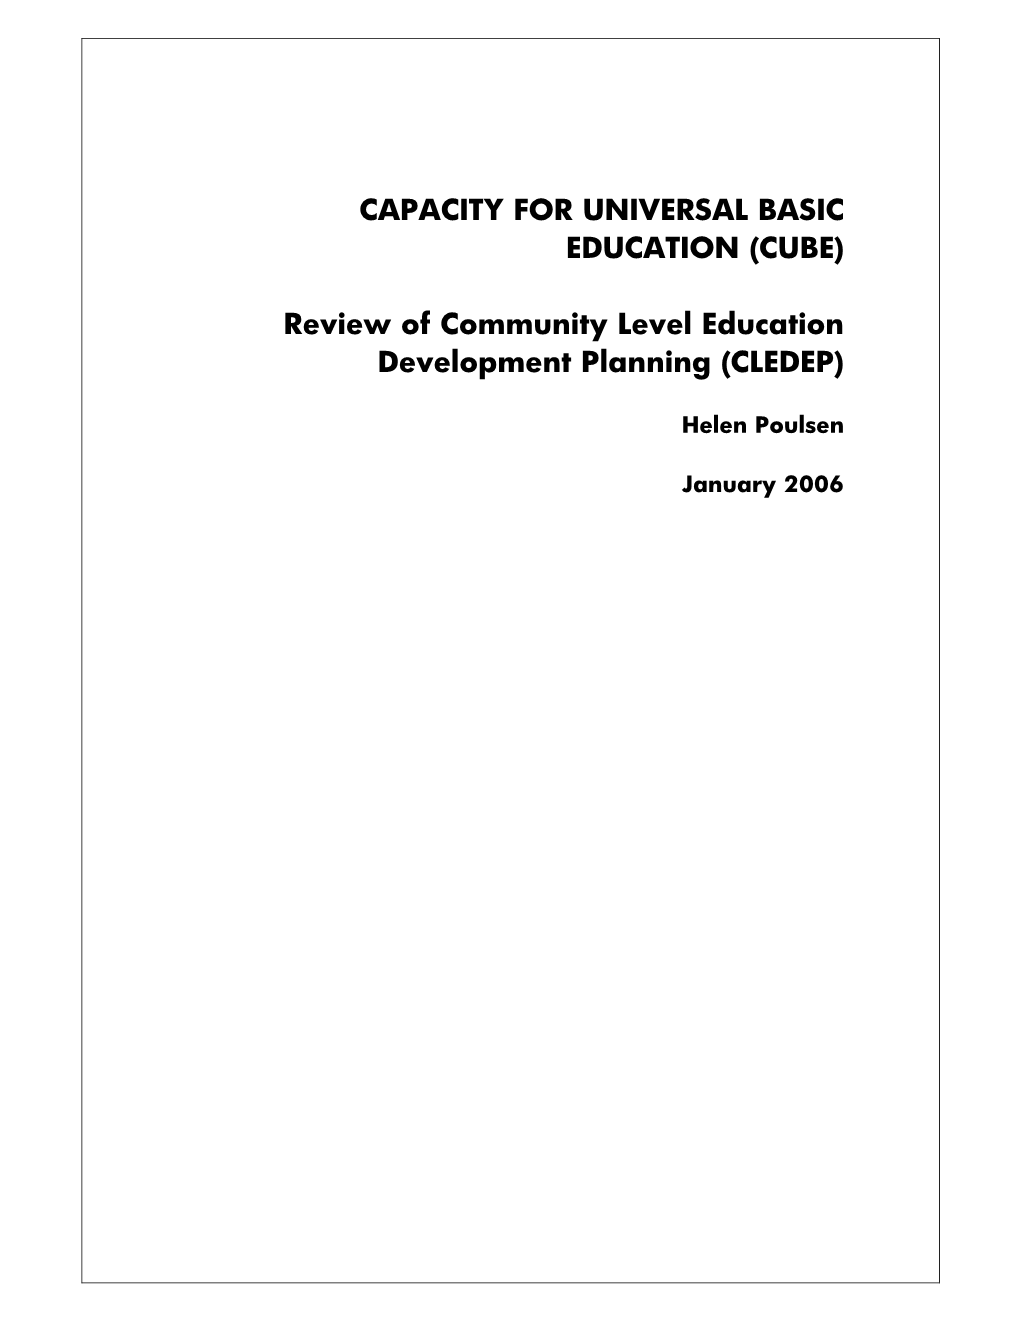 Capacity for Universal Basic Education (Cube)